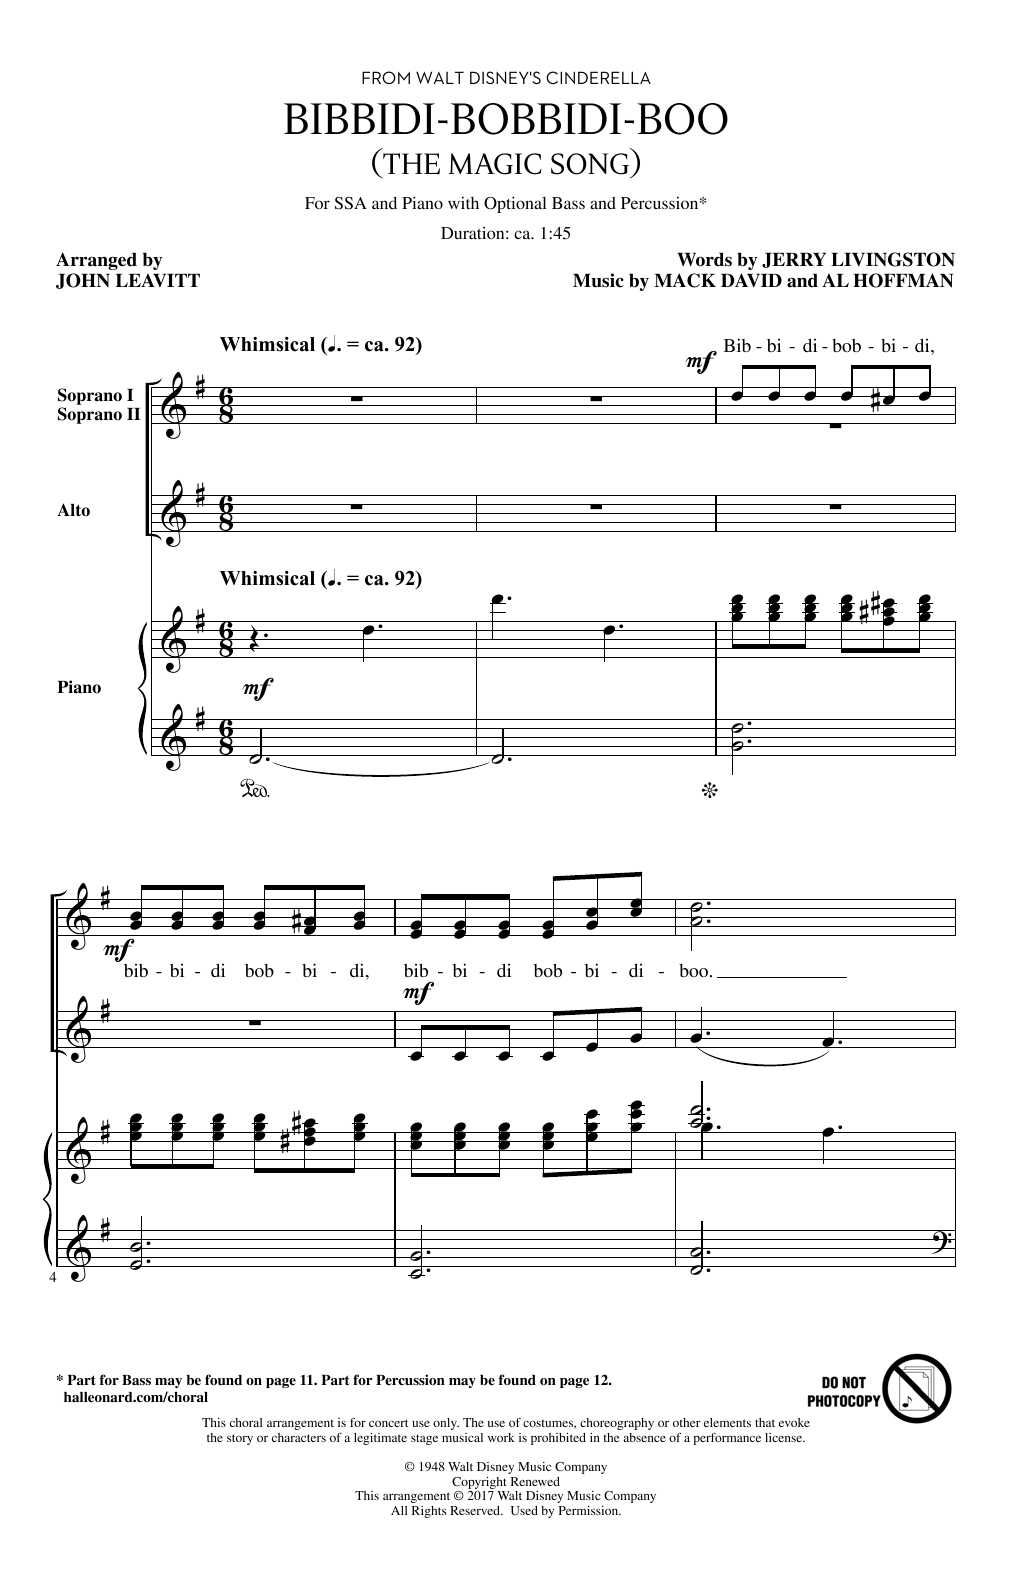 John Leavitt Bibbidi-Bobbidi-Boo (The Magic Song) (from Disney's Cinderella) Sheet Music Notes & Chords for SSA - Download or Print PDF